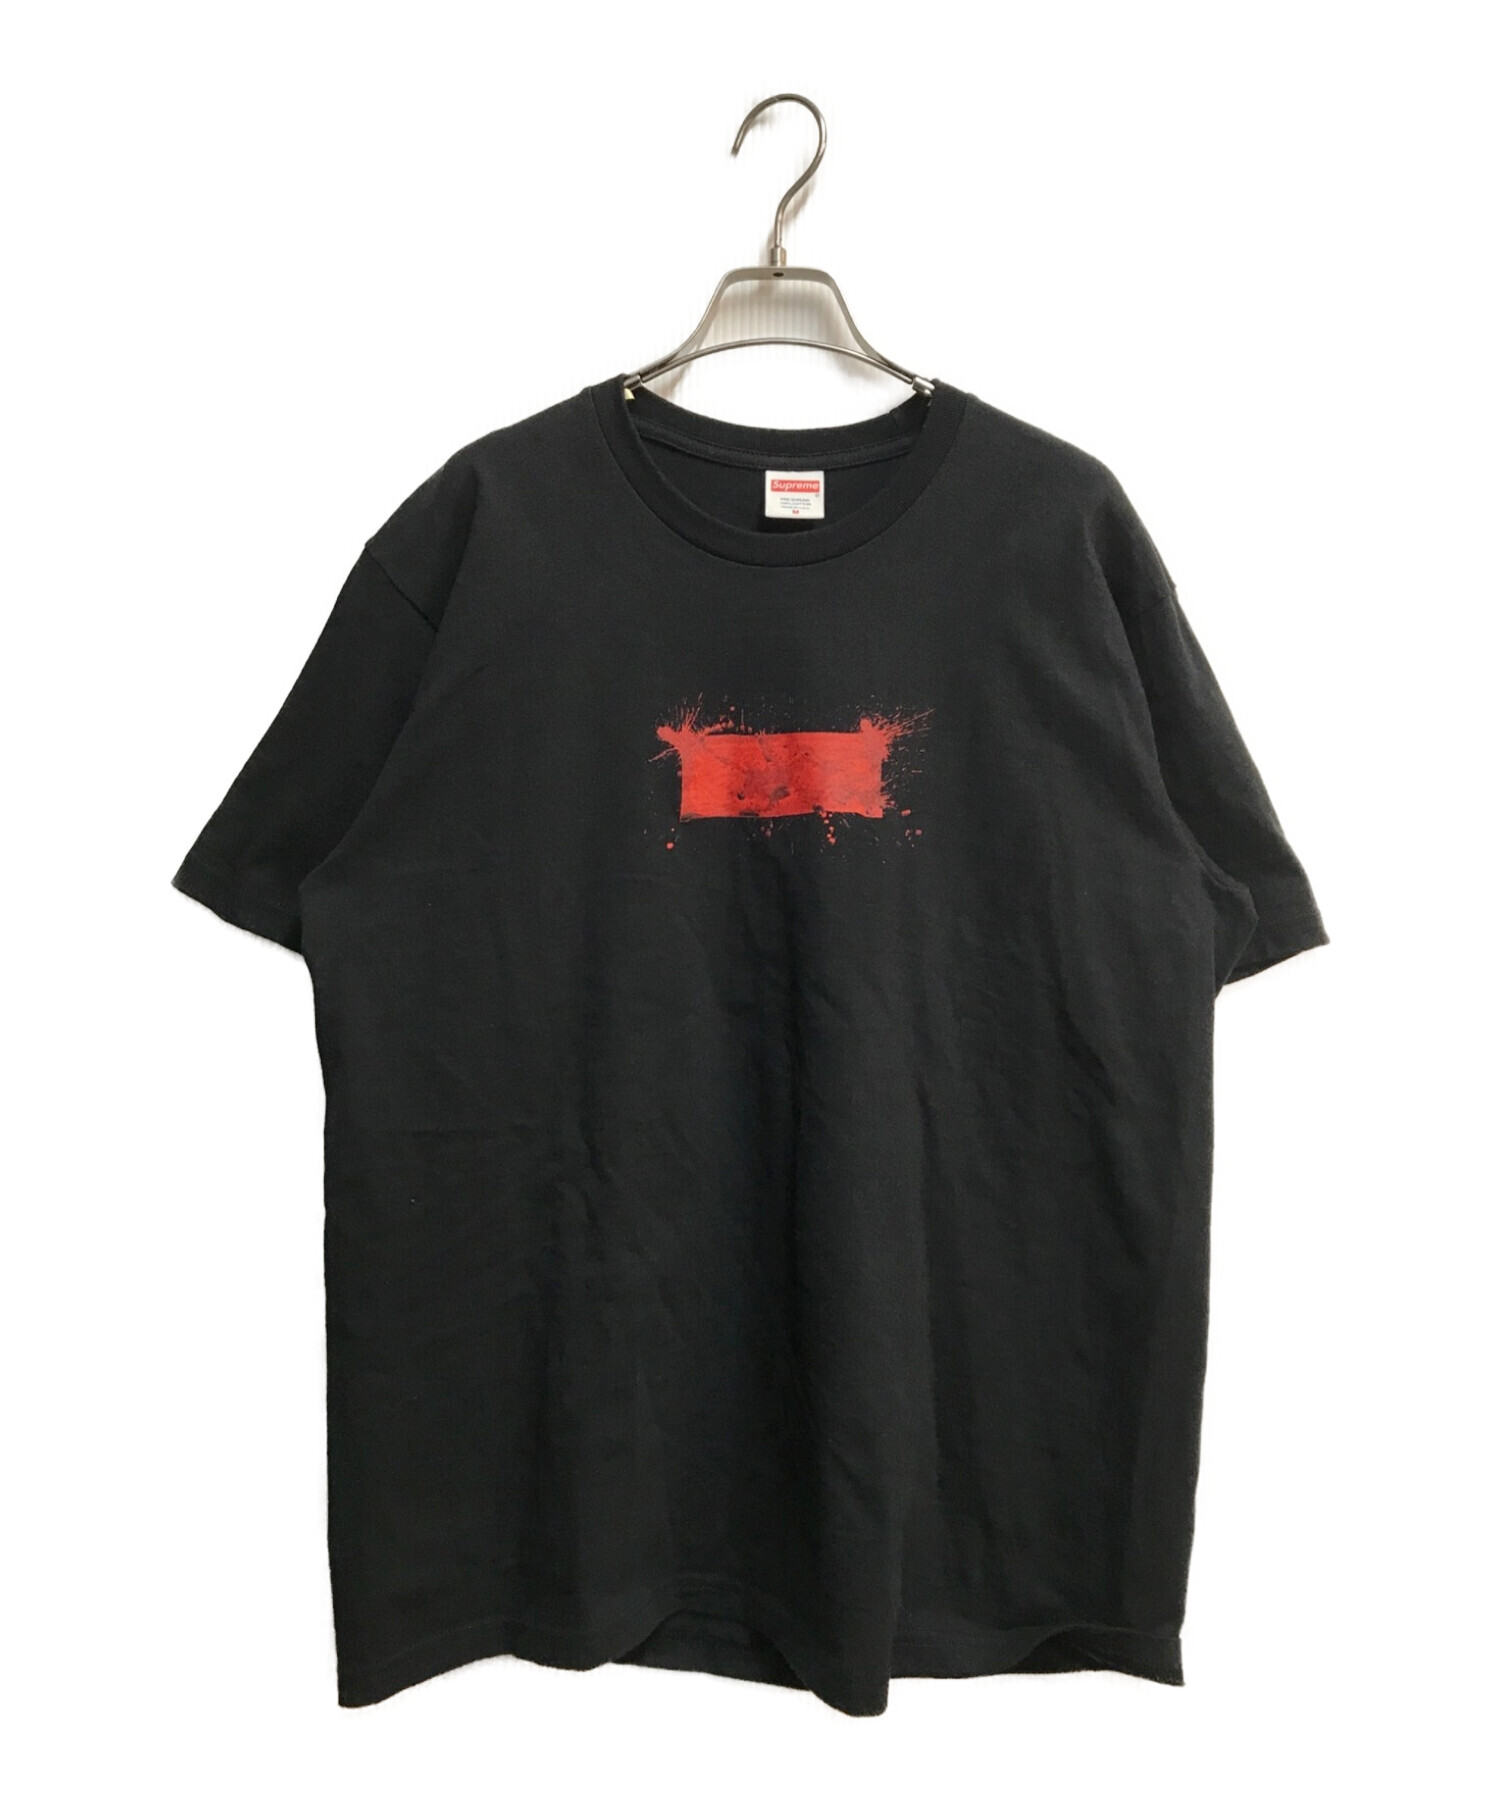 Supreme Red on Black Box Logo Tee Shirt T-Shirt Sz M